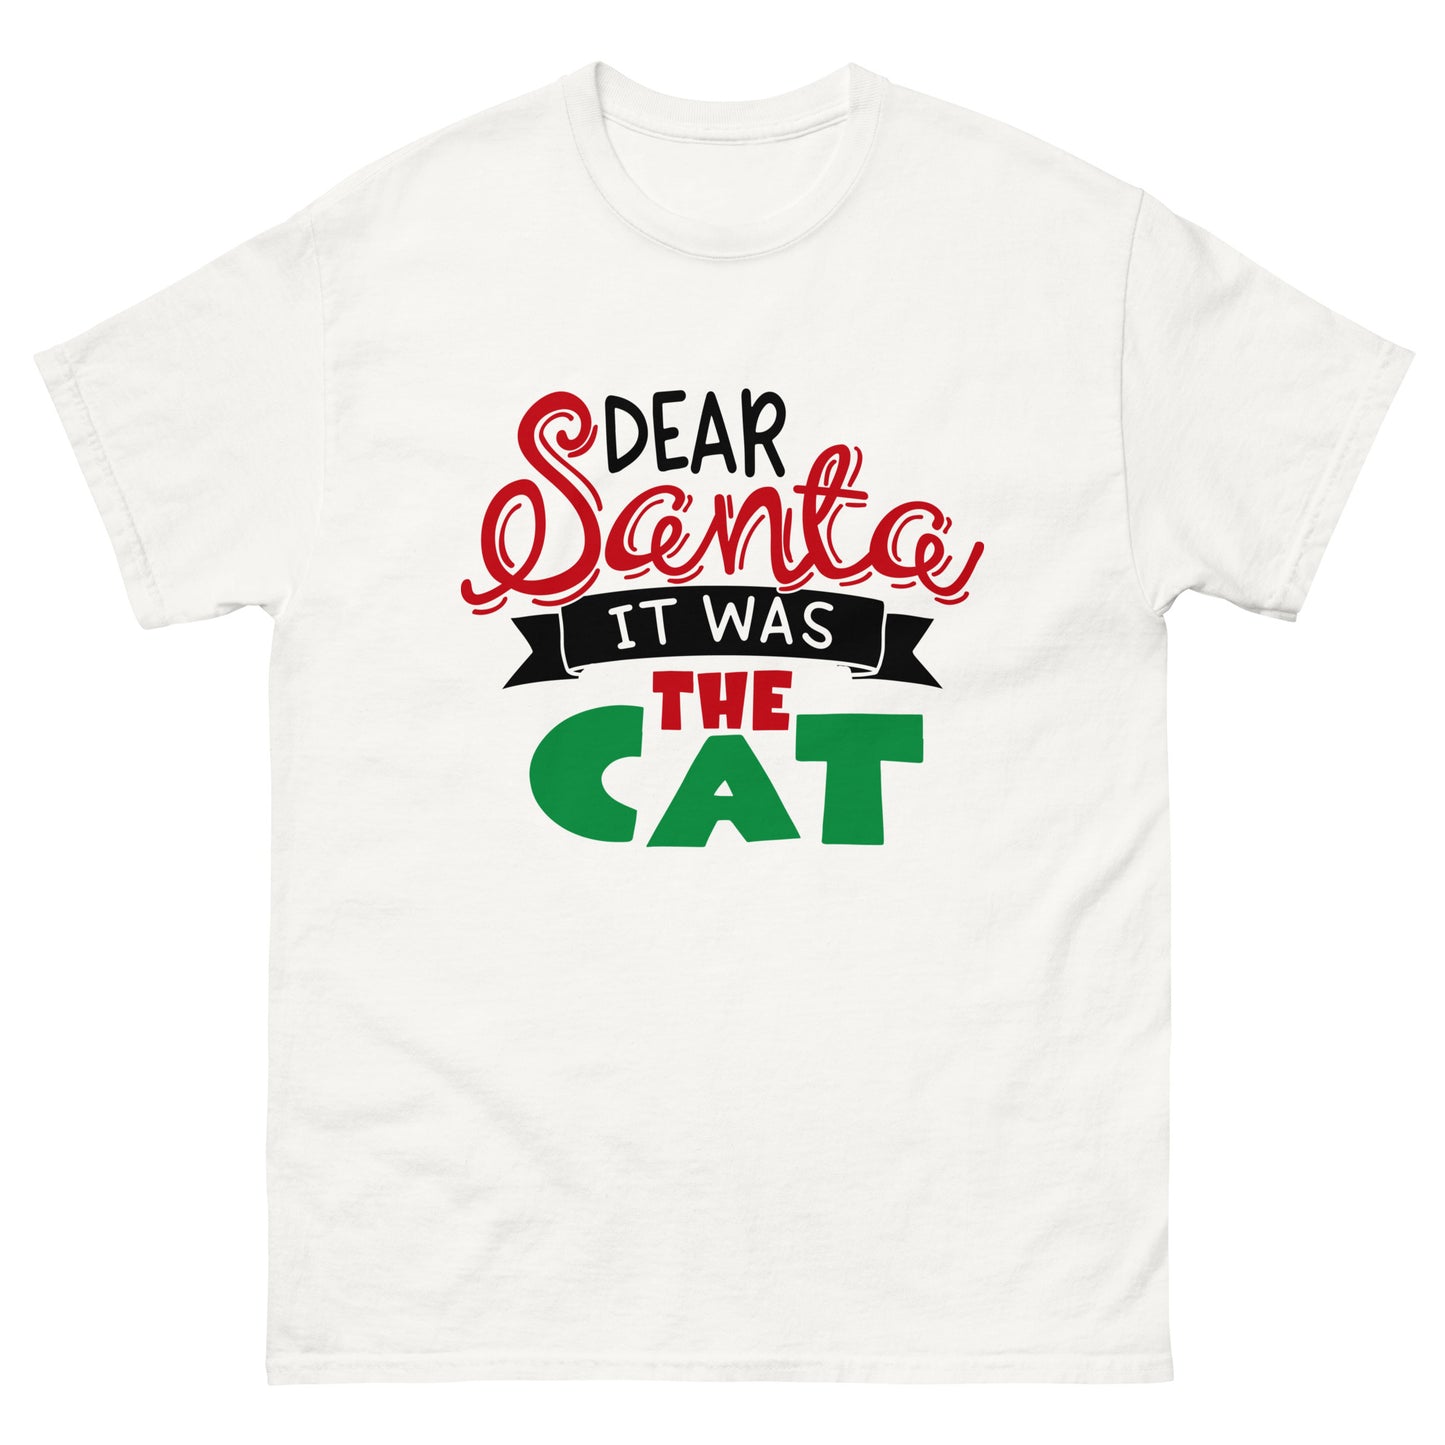 Dear Santa, It was the Cat - Men's classic tee